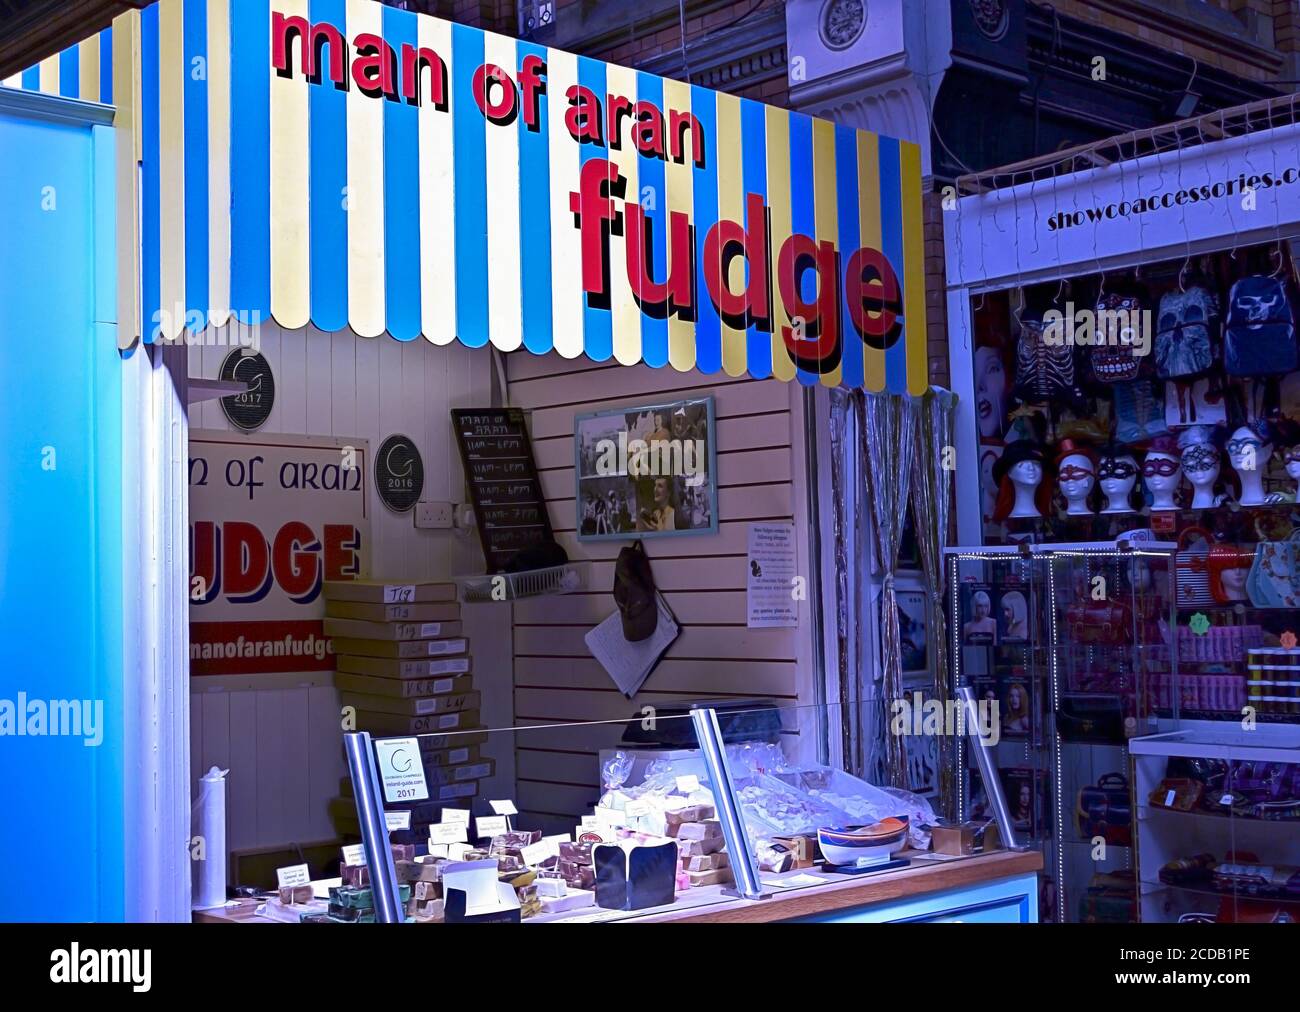 George’s Street Arcade market. Man of Aran Fudge booth, sign. Shopping Mall interior. Dublin, Ireland, Europe. Stock Photo